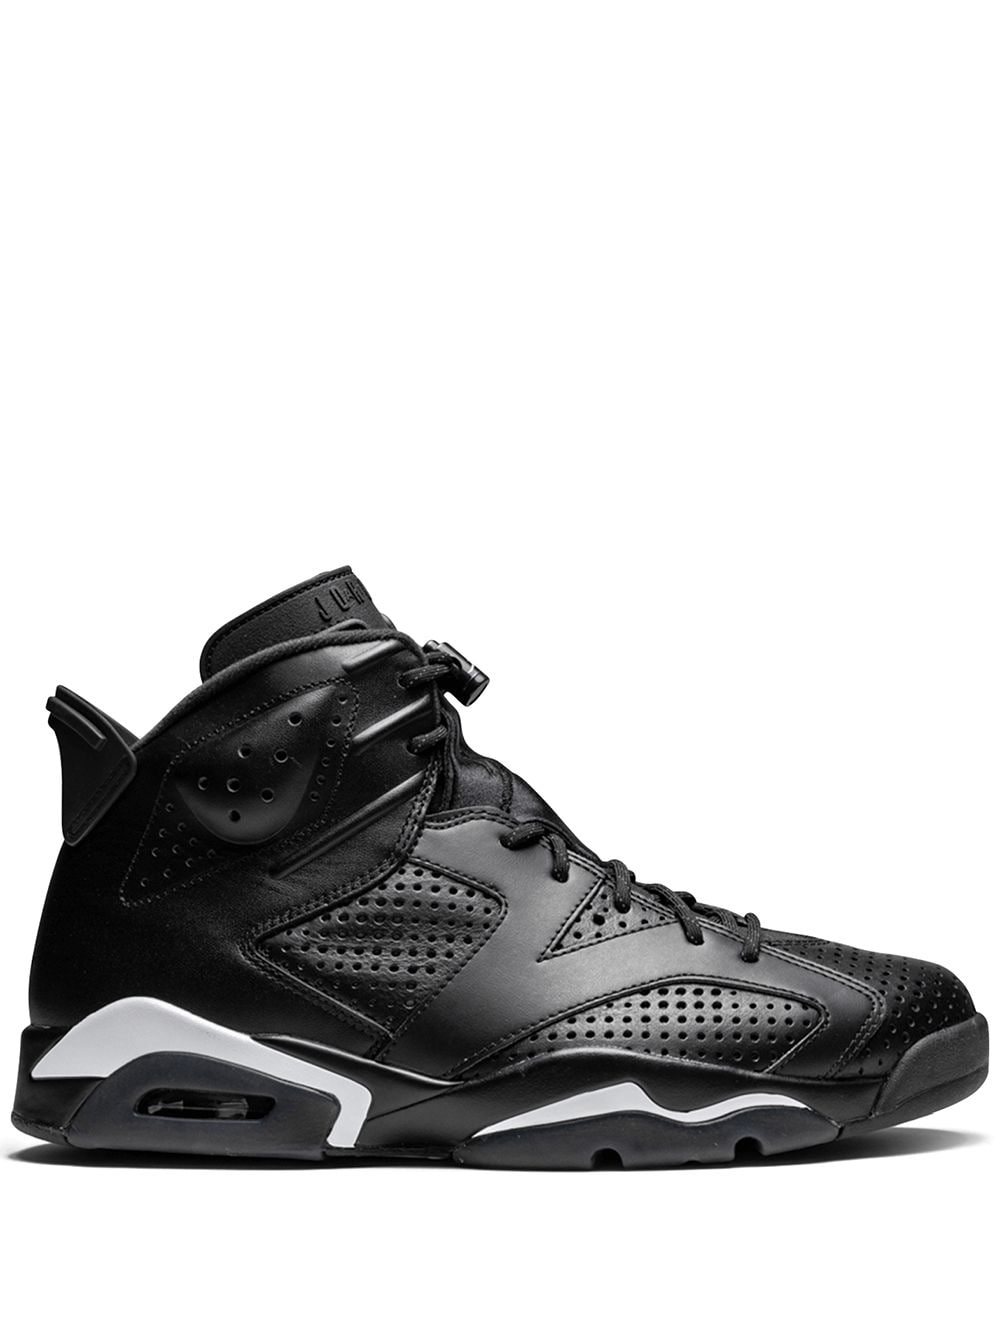 Jordan Air Jordan 6 Retro "Black Cat" sneakers